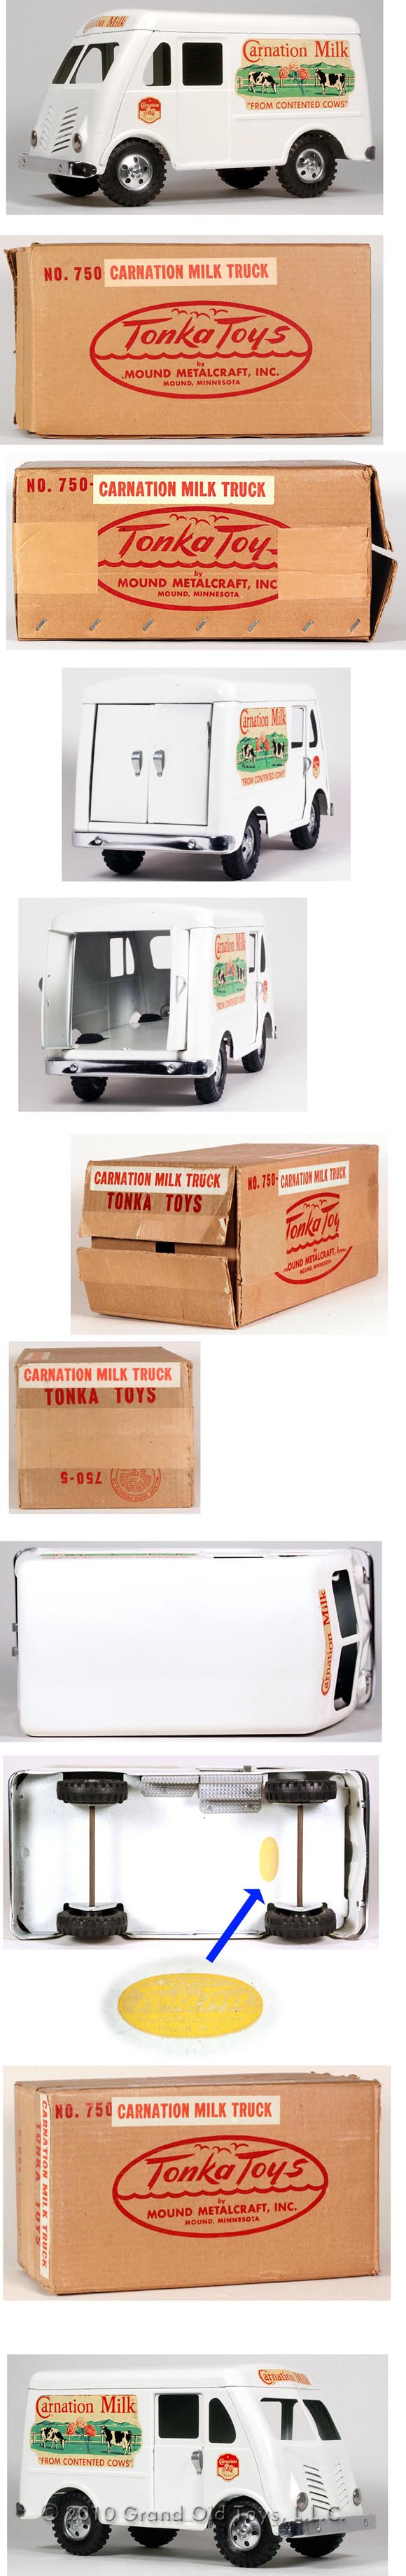 1955 Tonka Carnation Milk Truck In Original Box